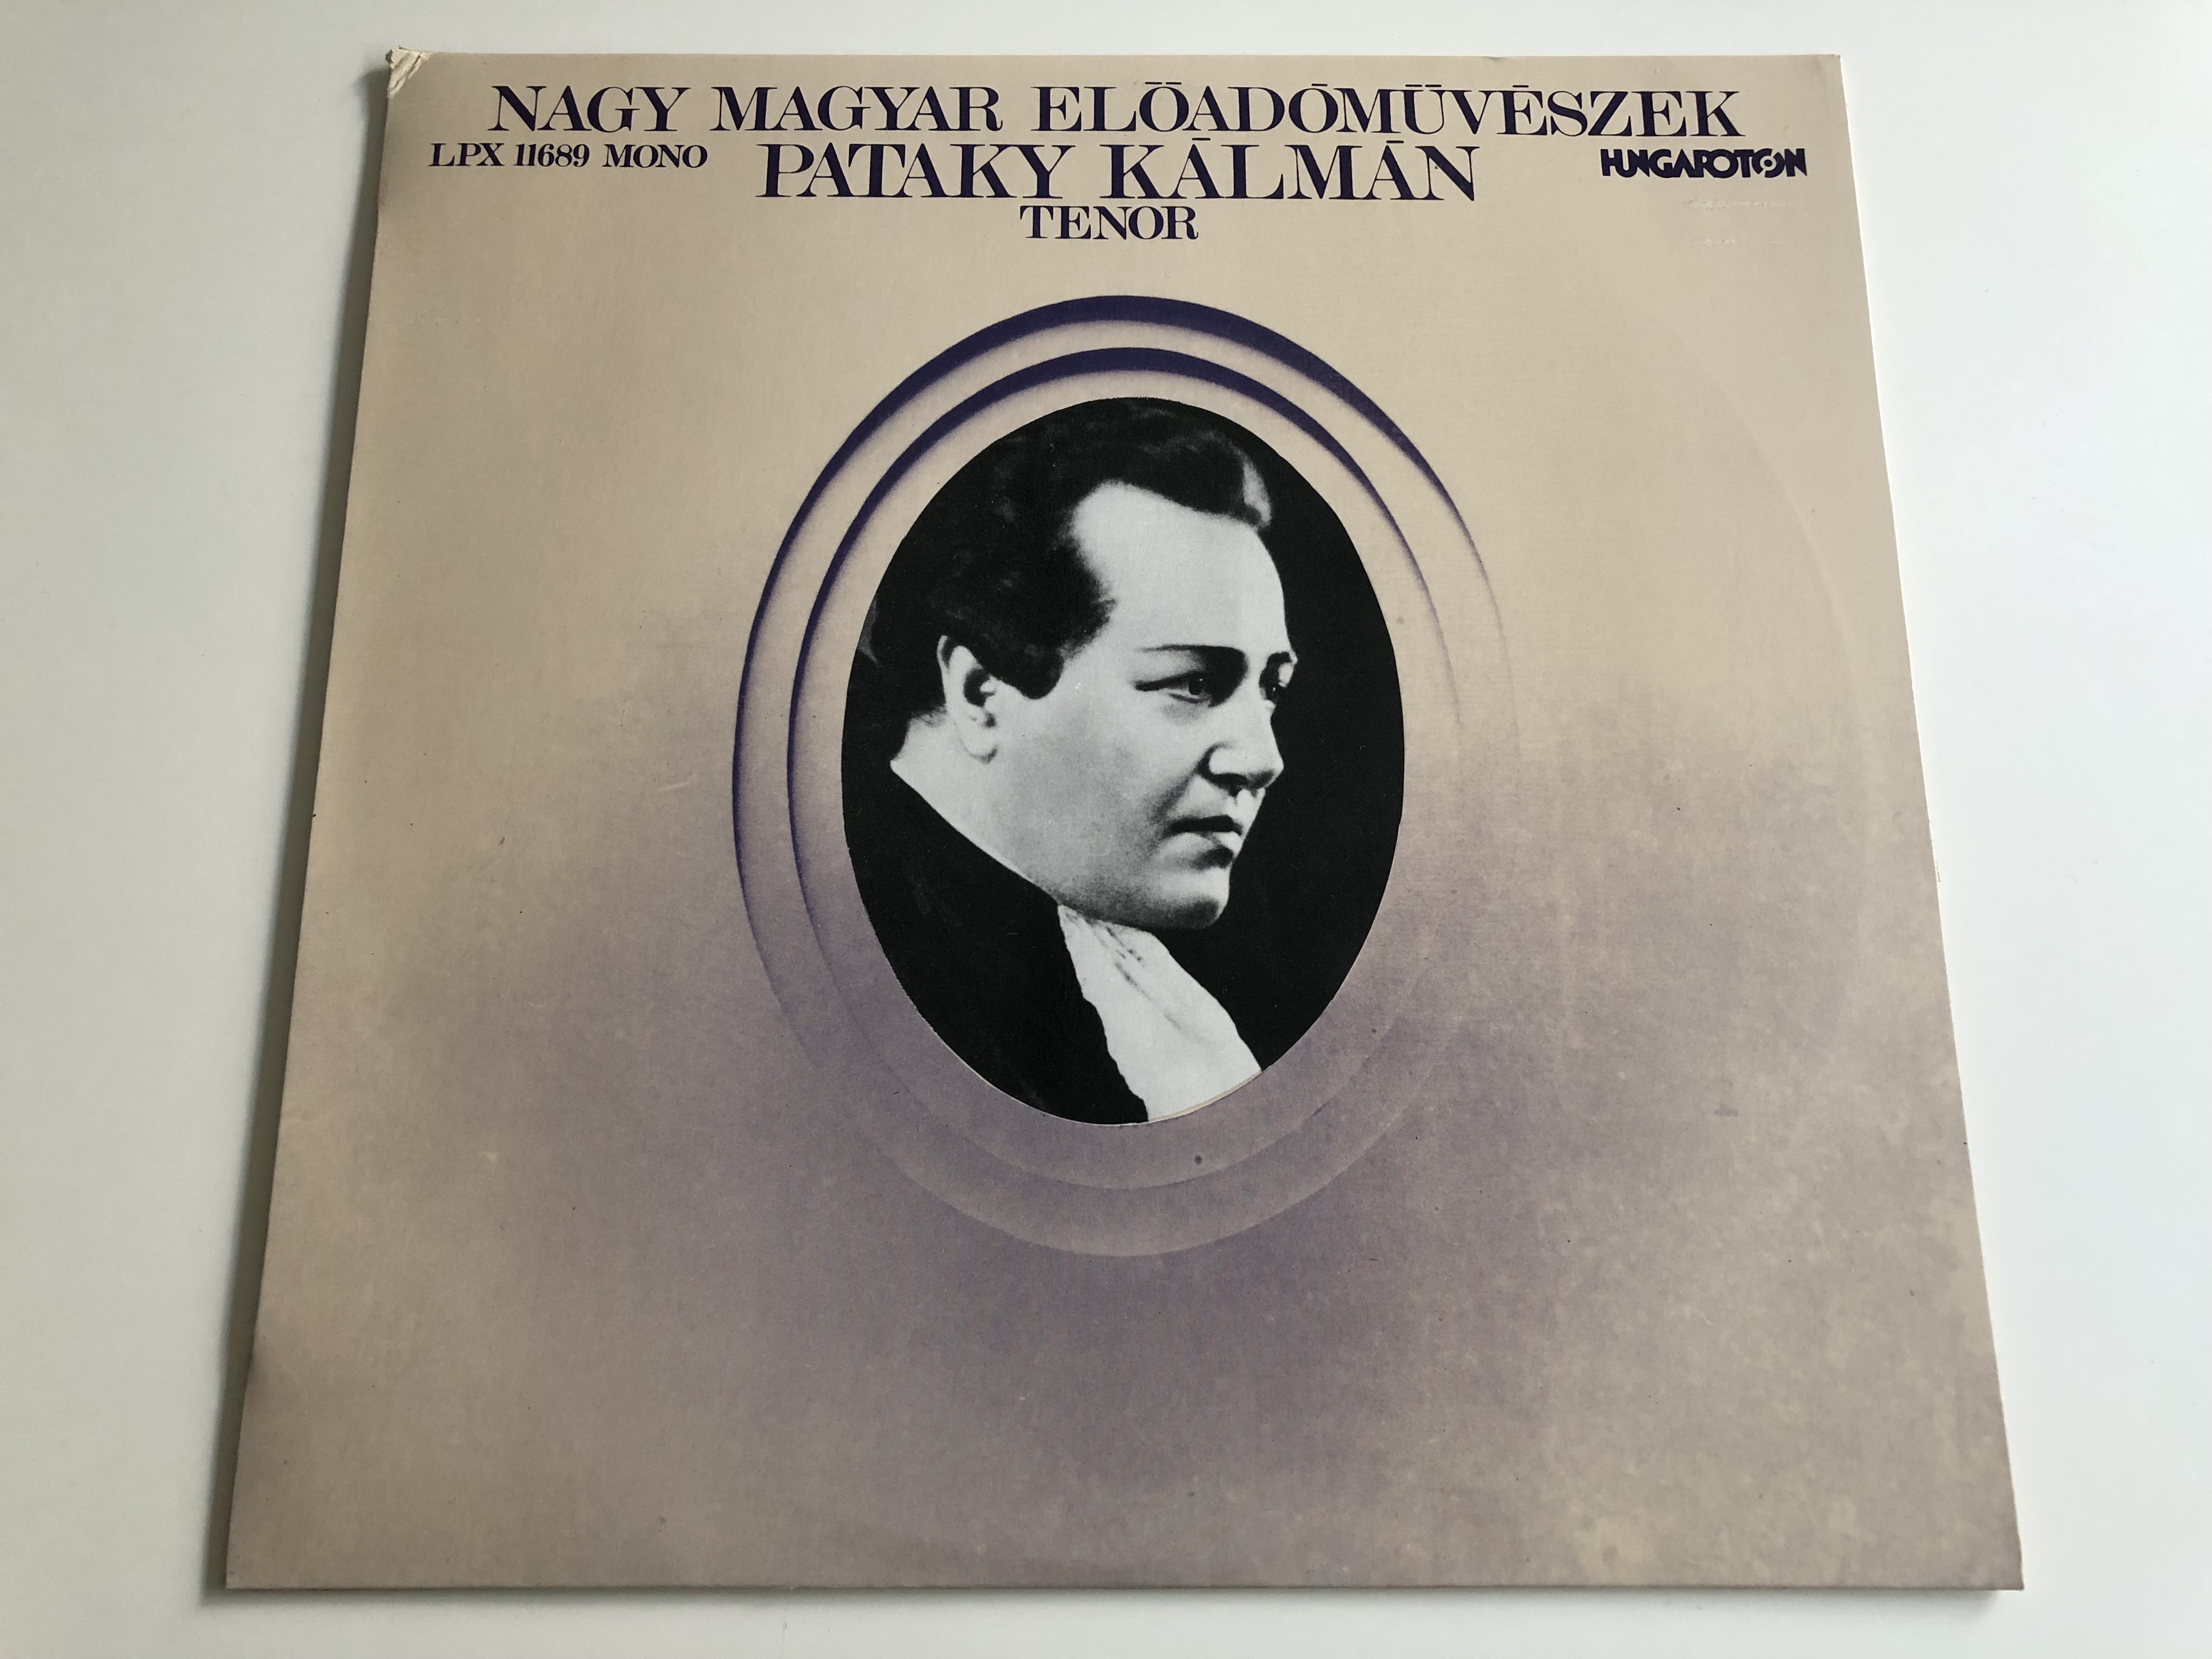 pataky-k-lm-n-tenor-nagy-magyar-el-ad-m-v-szek-great-hungarian-performers-hungaroton-1978-lpx11689-mono-1-.jpg